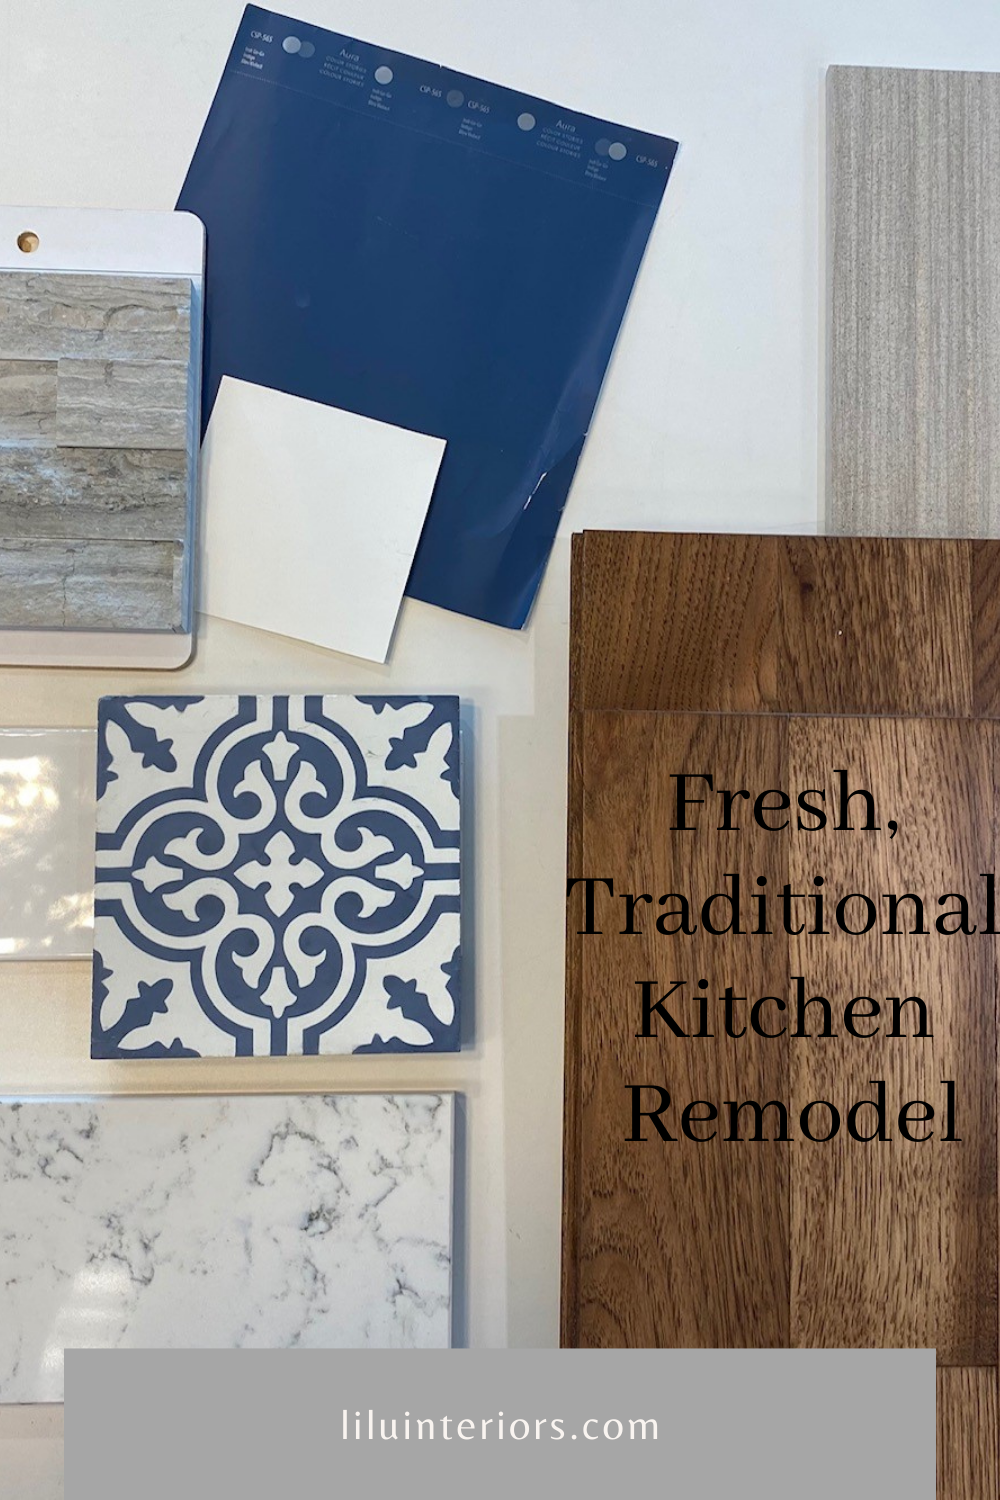 Fresh, traditional kitchen remodel remodel